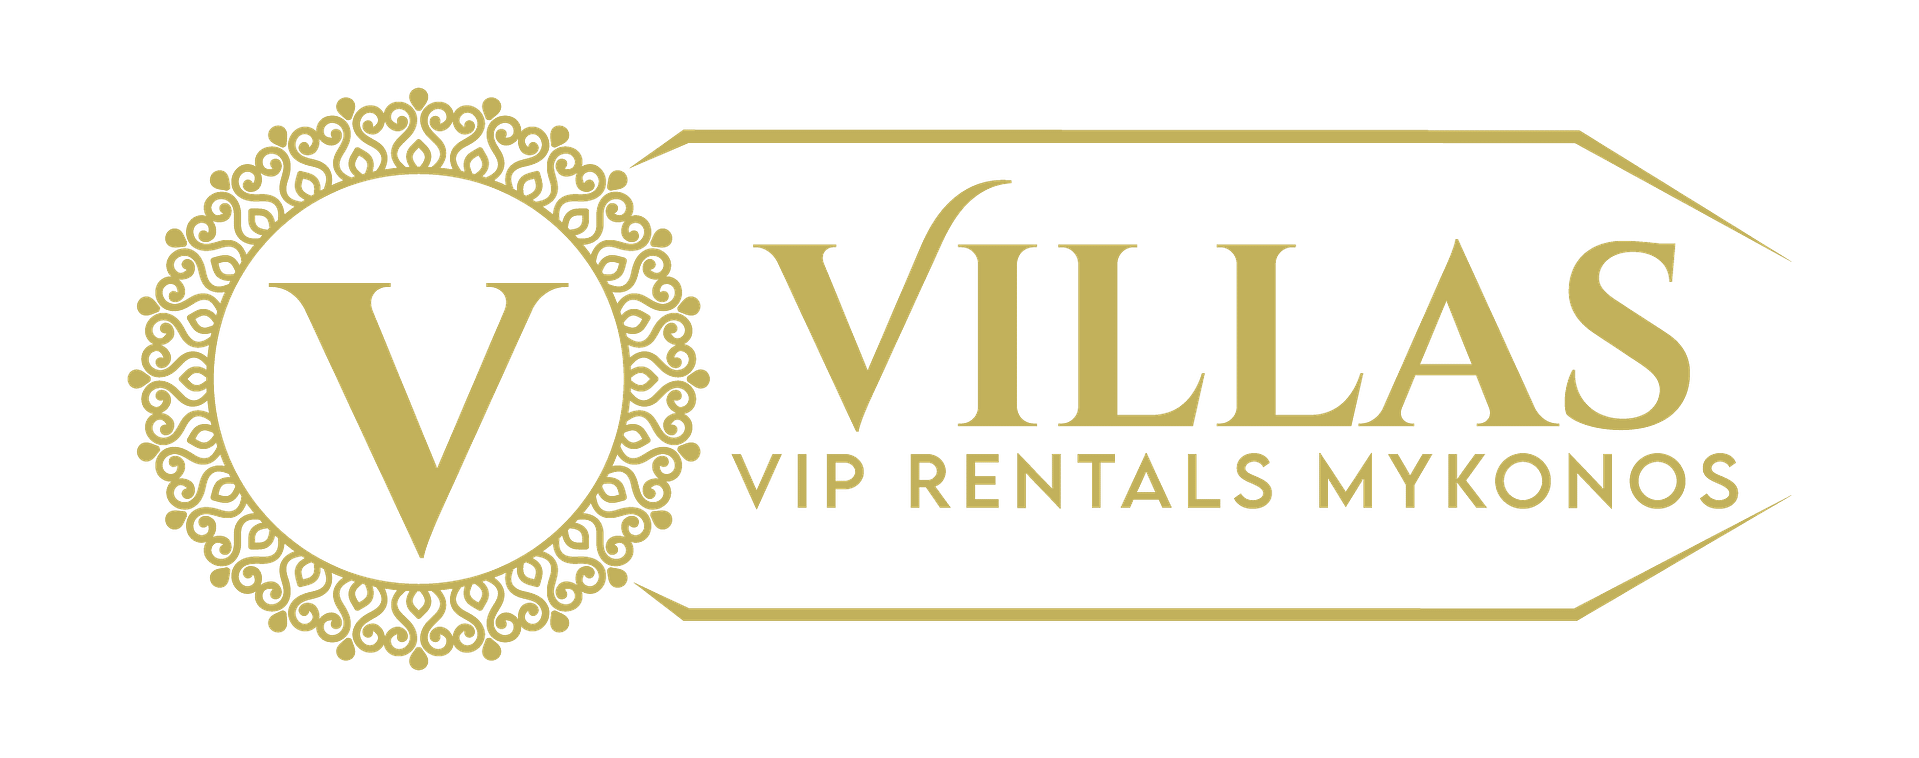 Villas Mykonos Rent - logo - villas in Mykonos